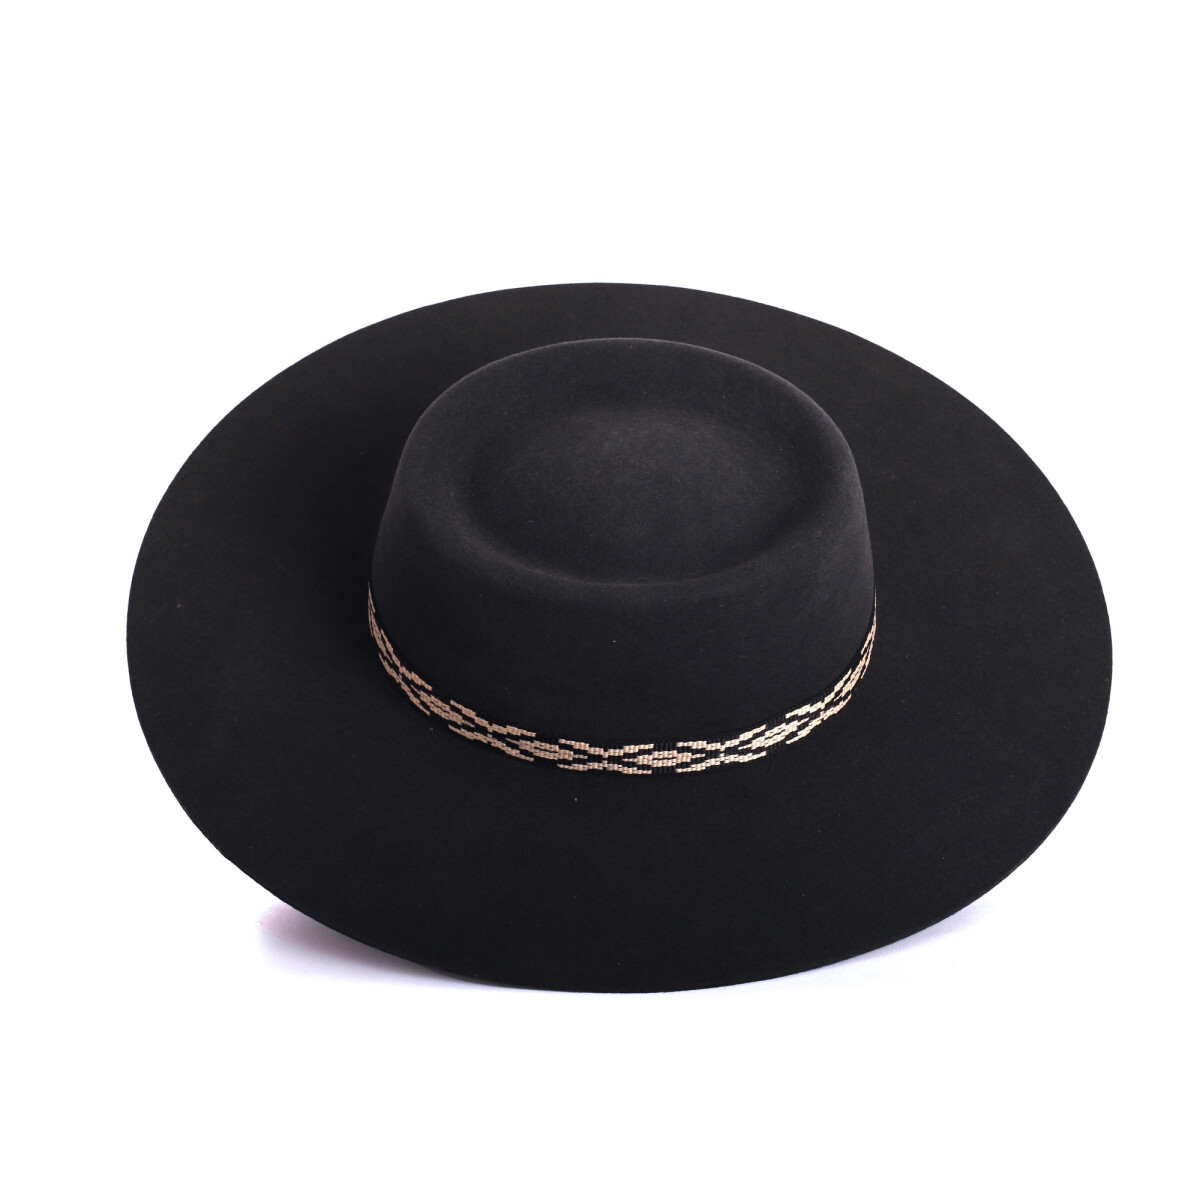 Sombrero Lider campero - negro 